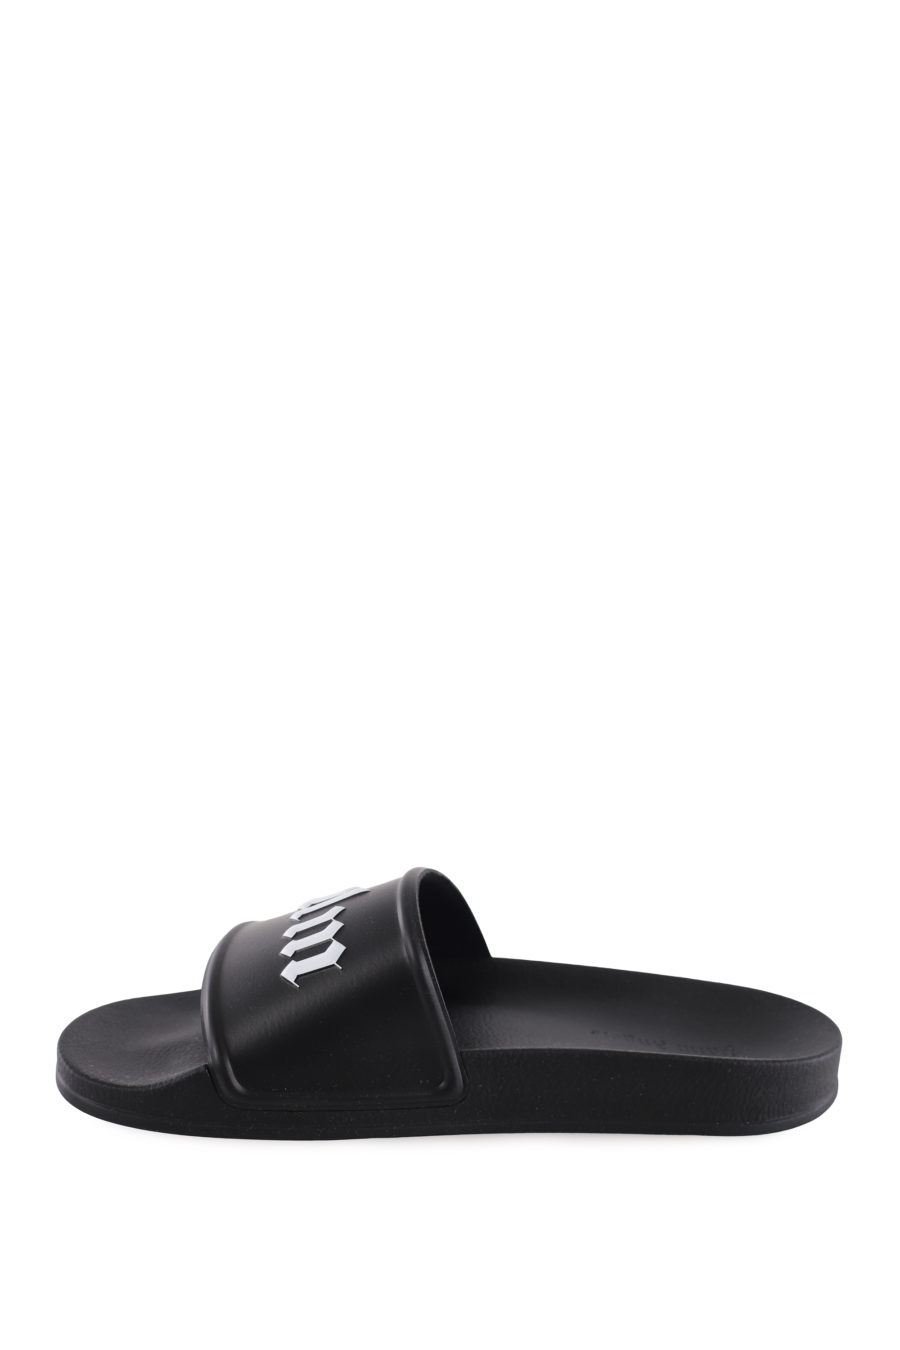 Sliders negras con logo blanco - IMG 7373